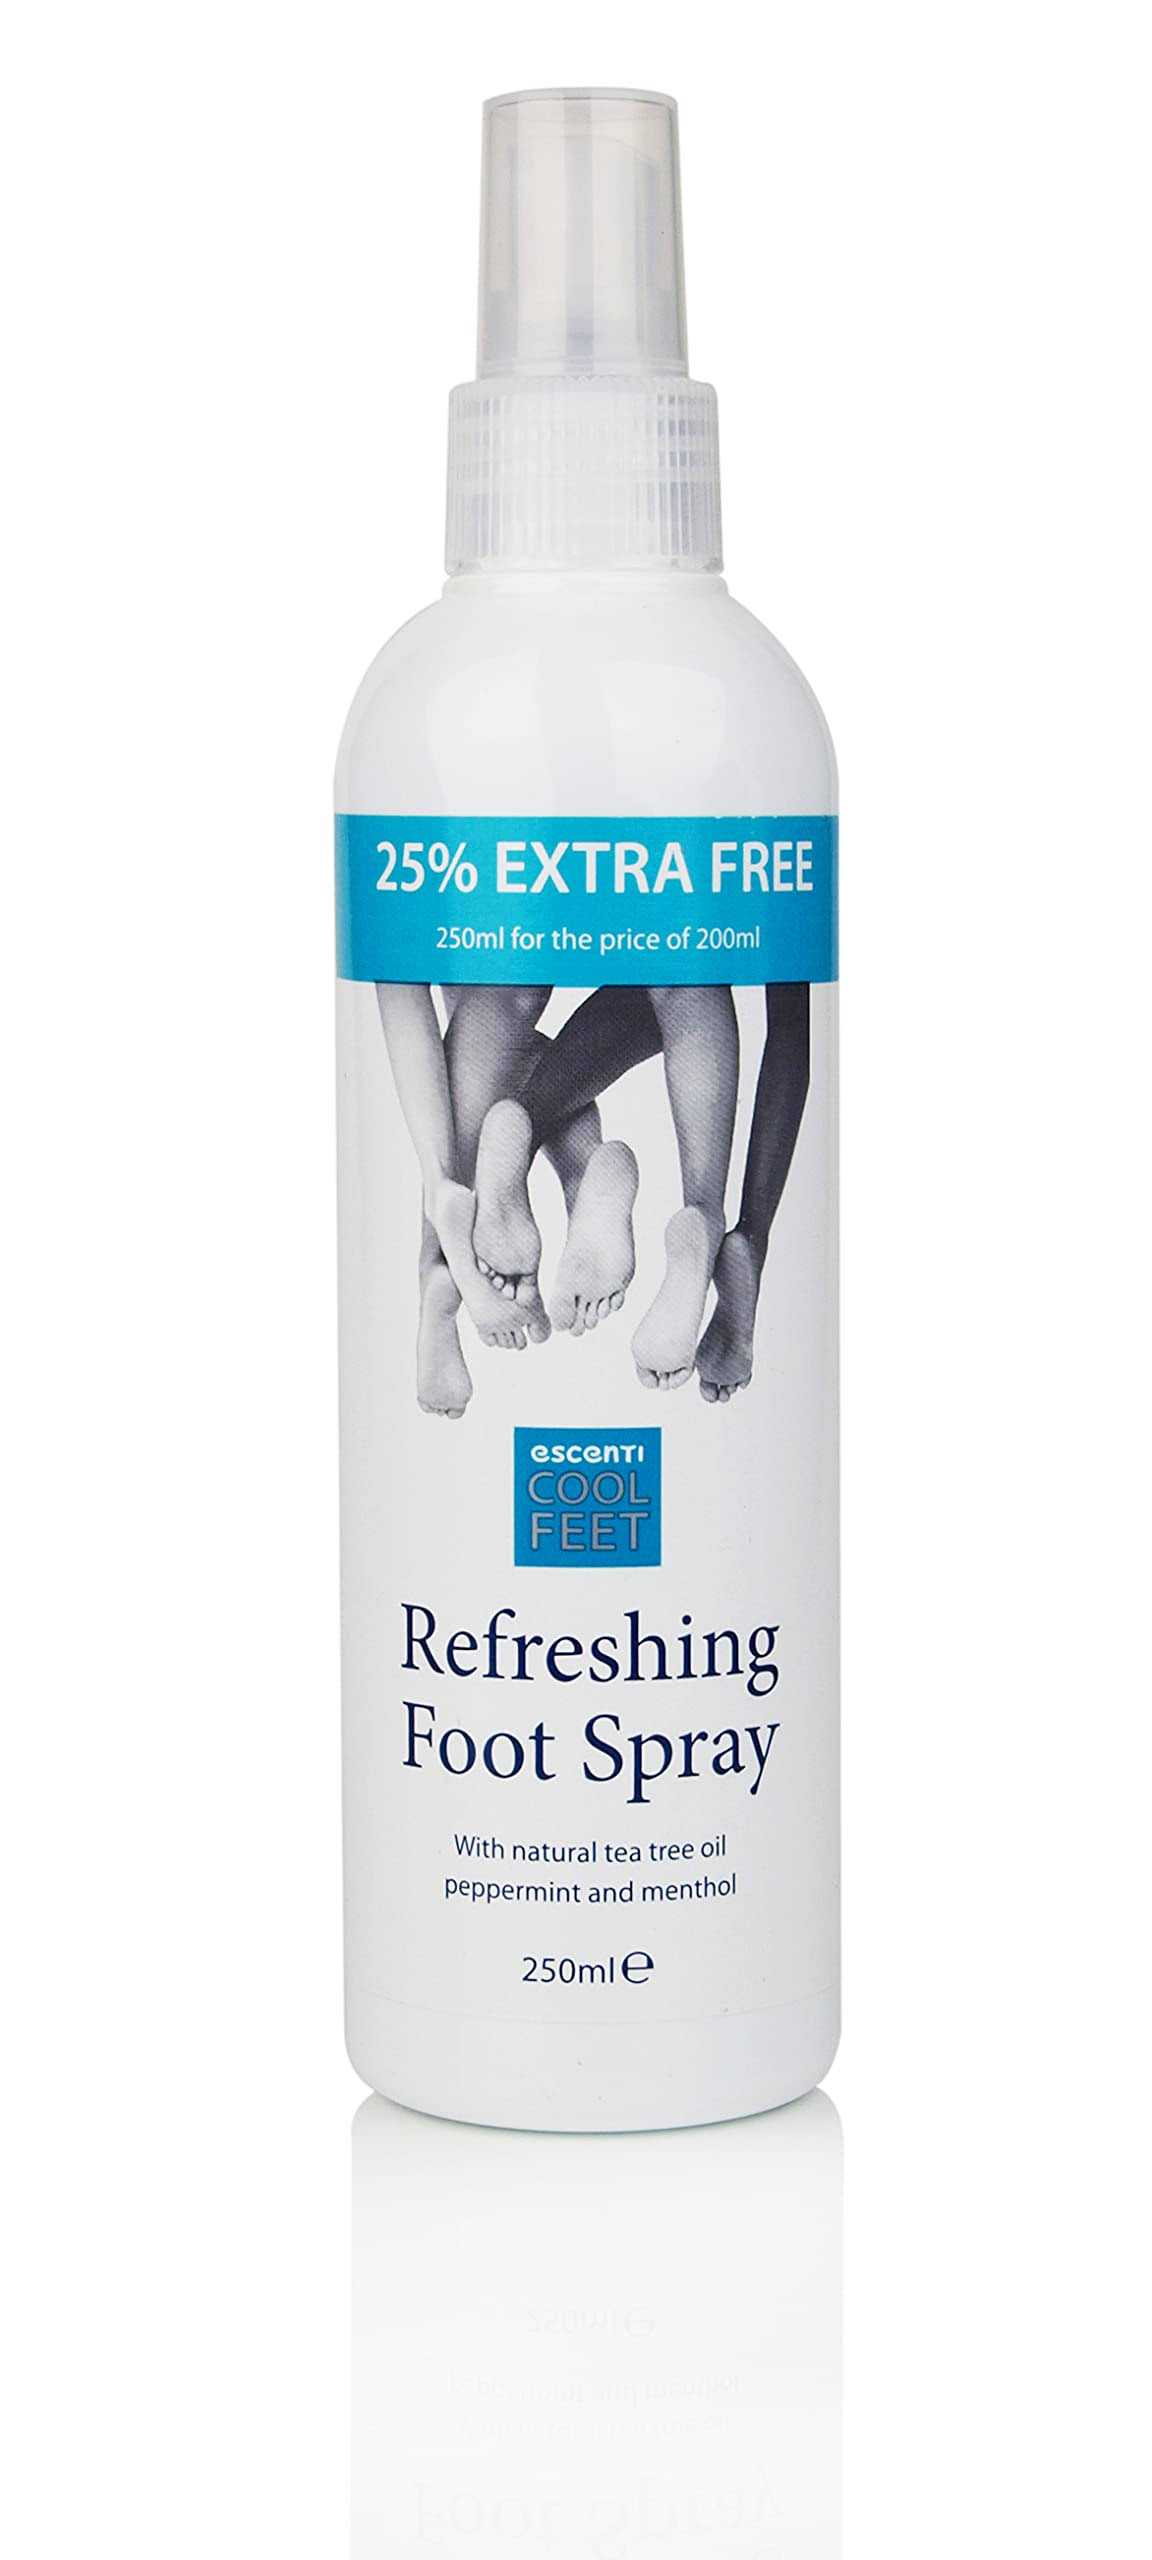 Escenti Cool Feet Refreshing Foot Spray - 250ml